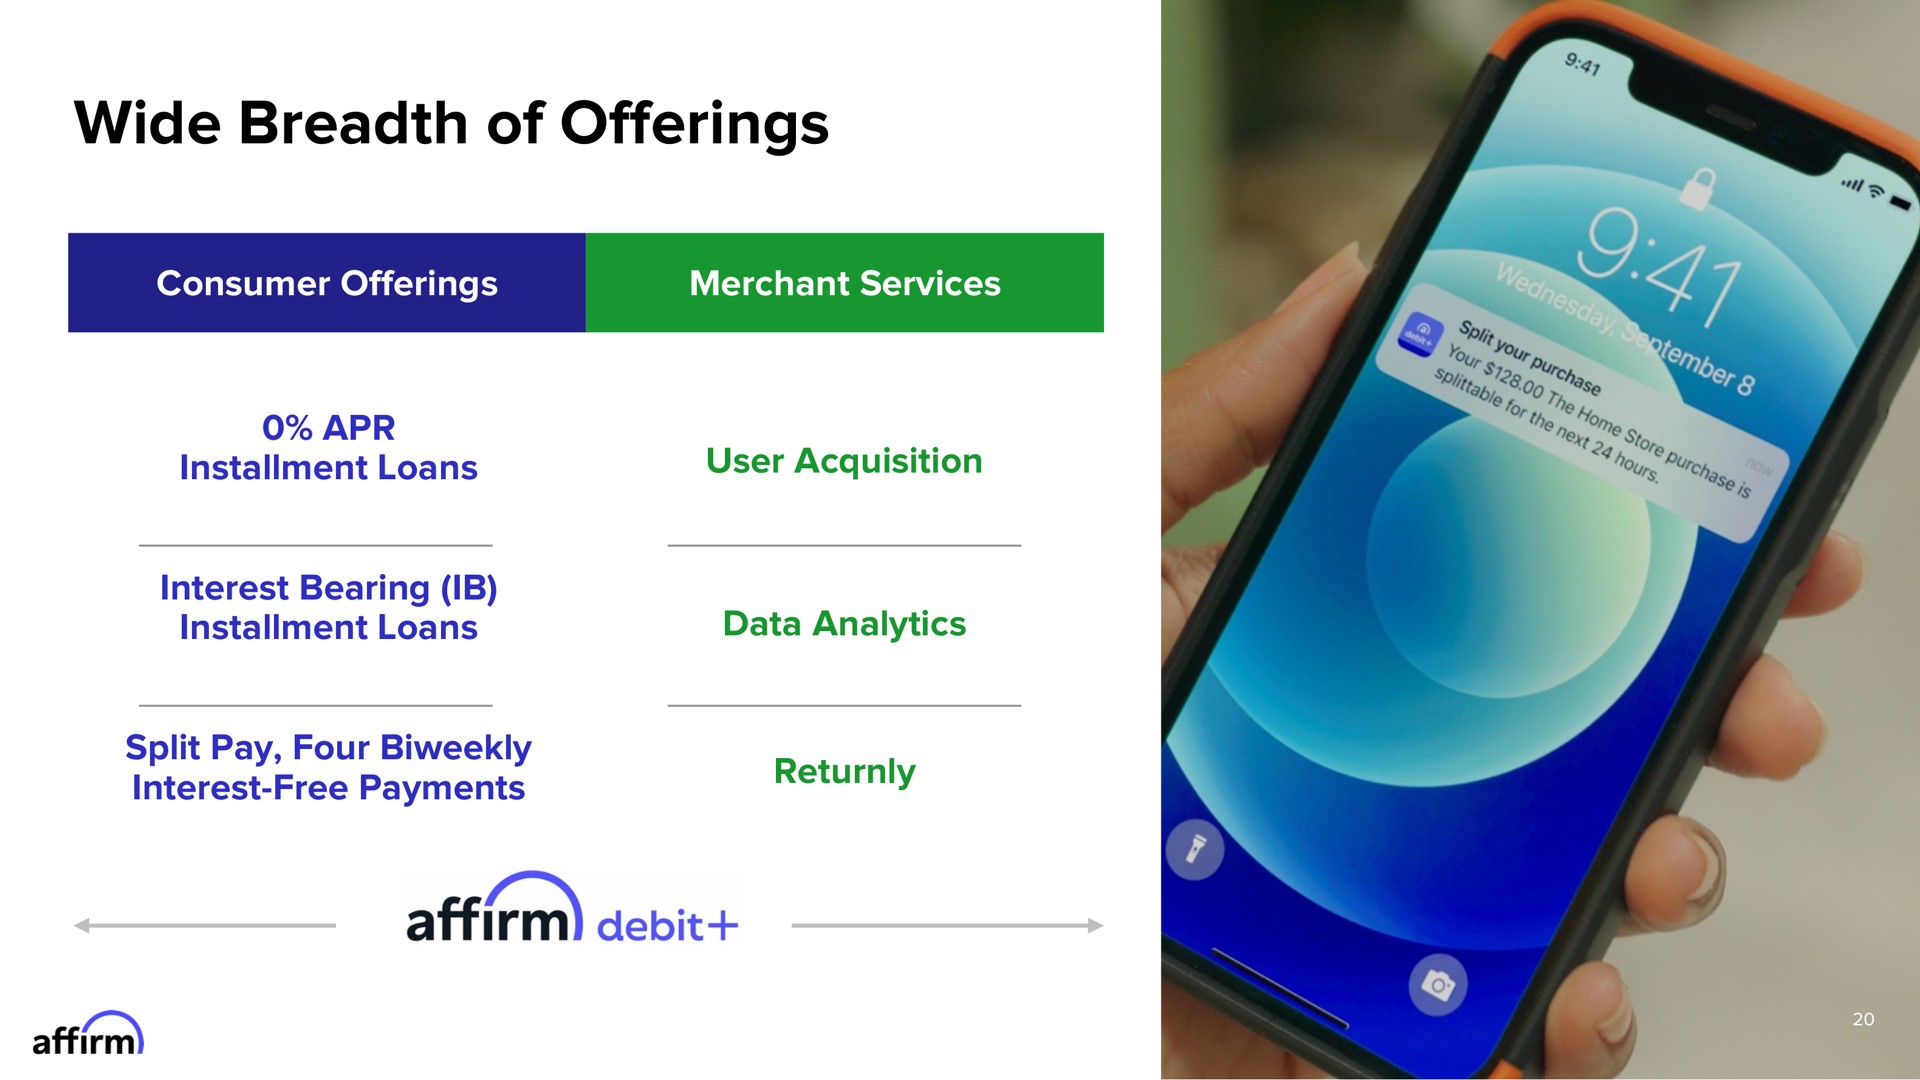 wide breadth of offerings affirm debit | Affirm